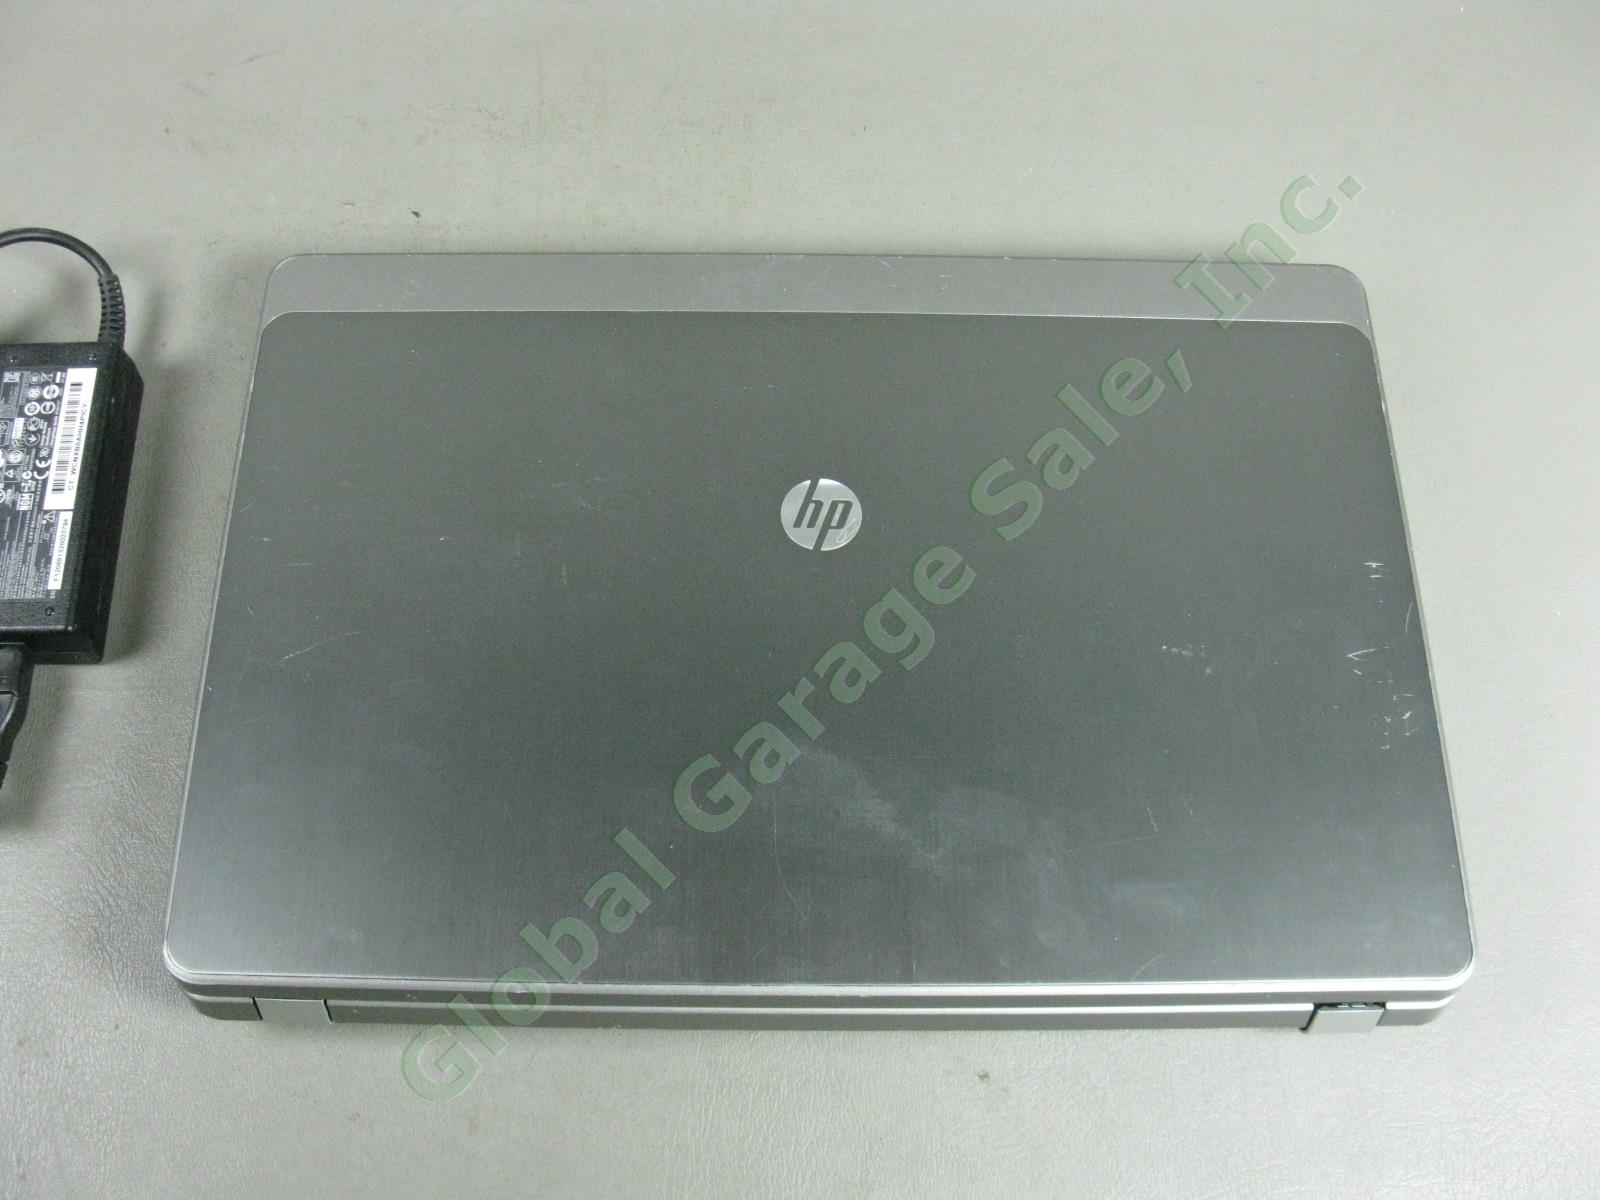 HP ProBook 4530s Laptop Computer Intel i5-2350M 2.30GHz 4GB 300GB Windows 10 Pro 4